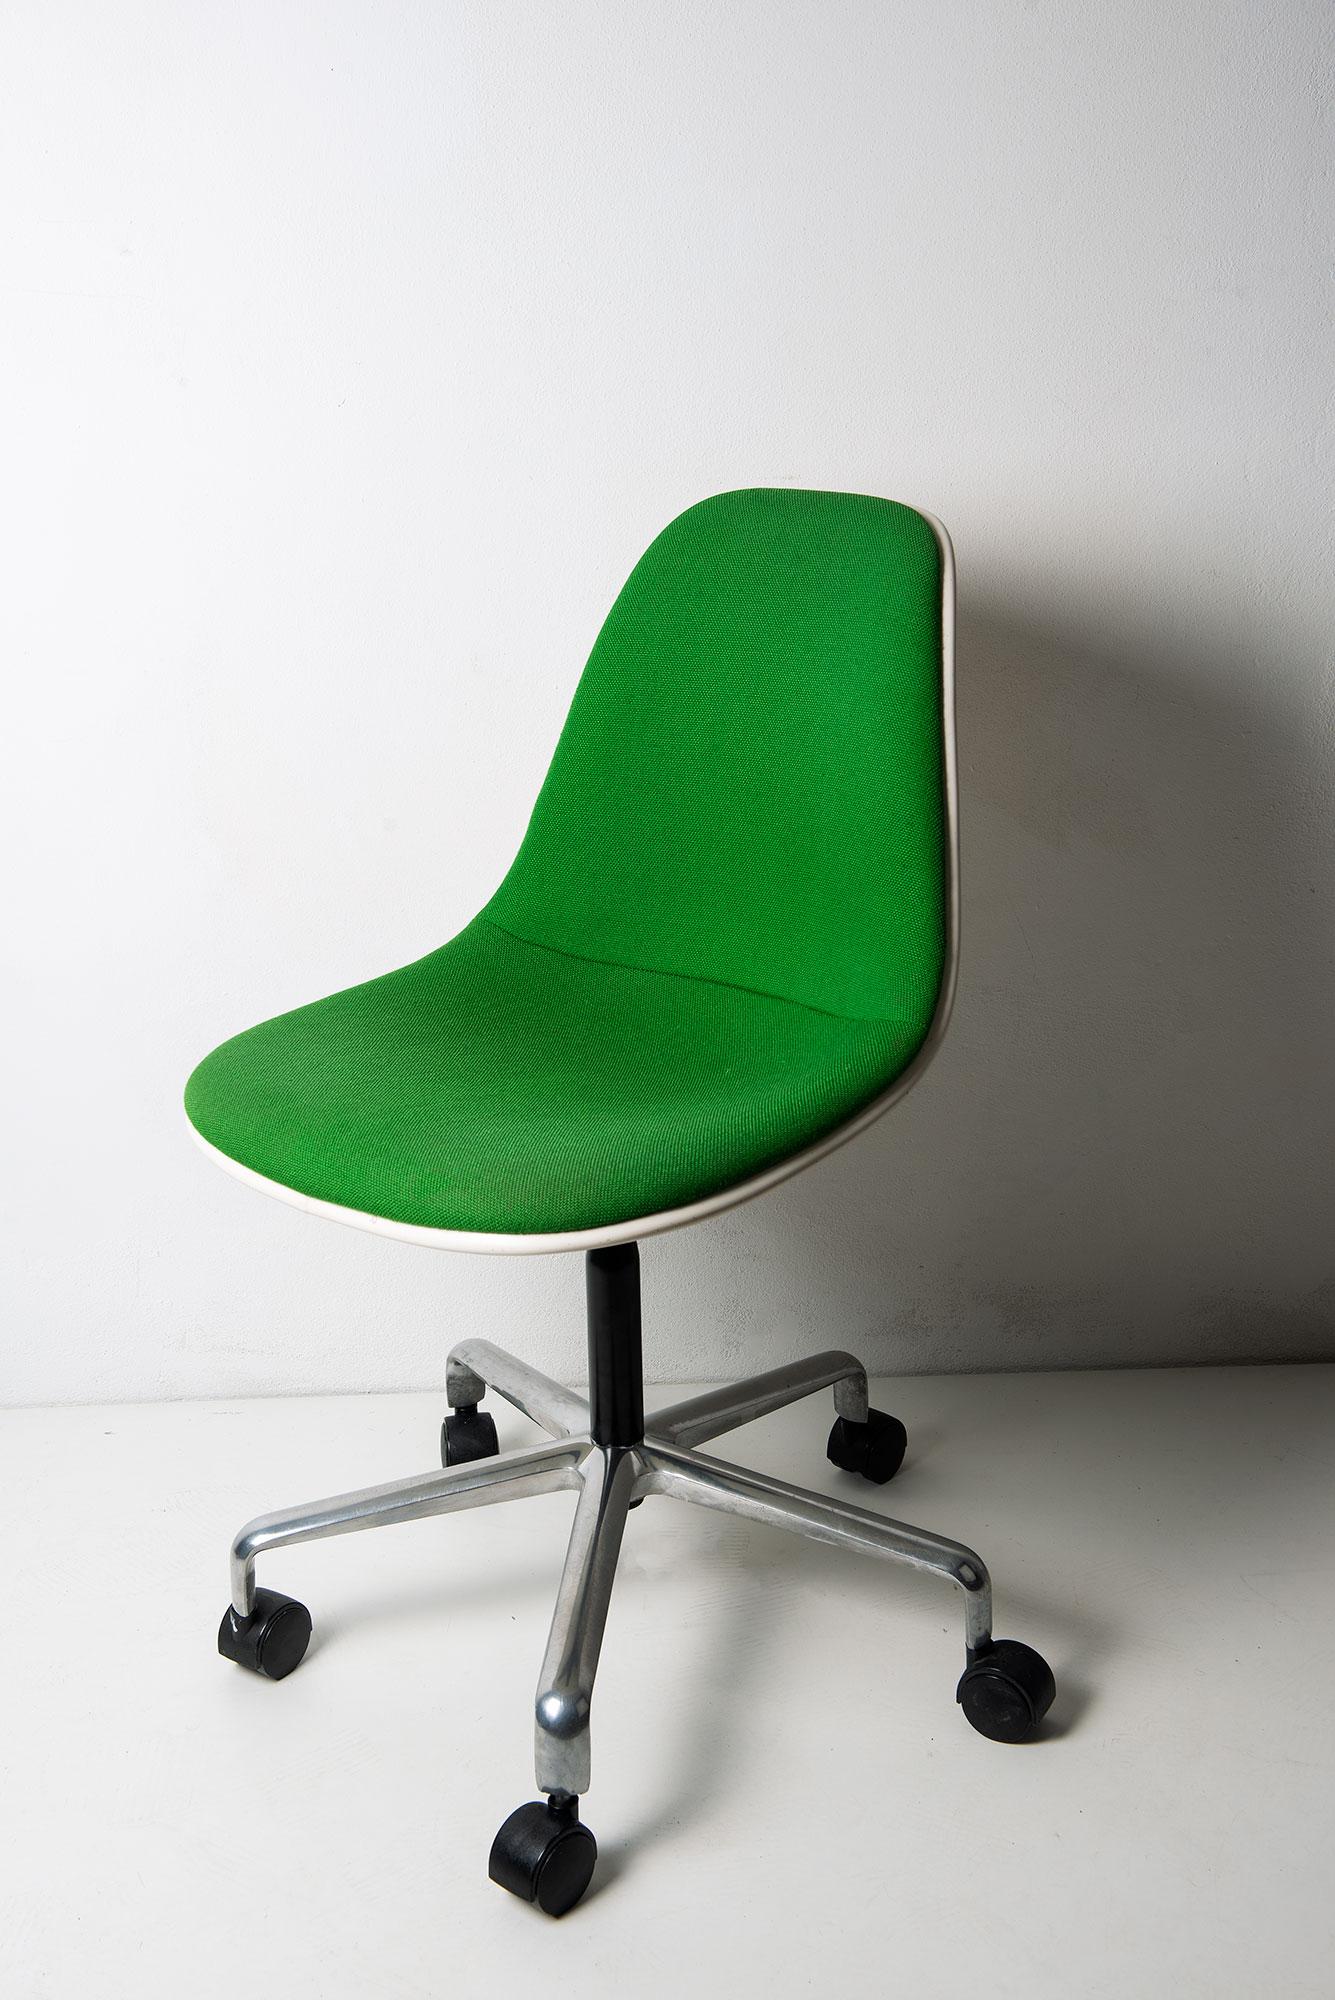 American Eames Fiberglass Pscc Chair for Herman Miller, 1960s For Sale